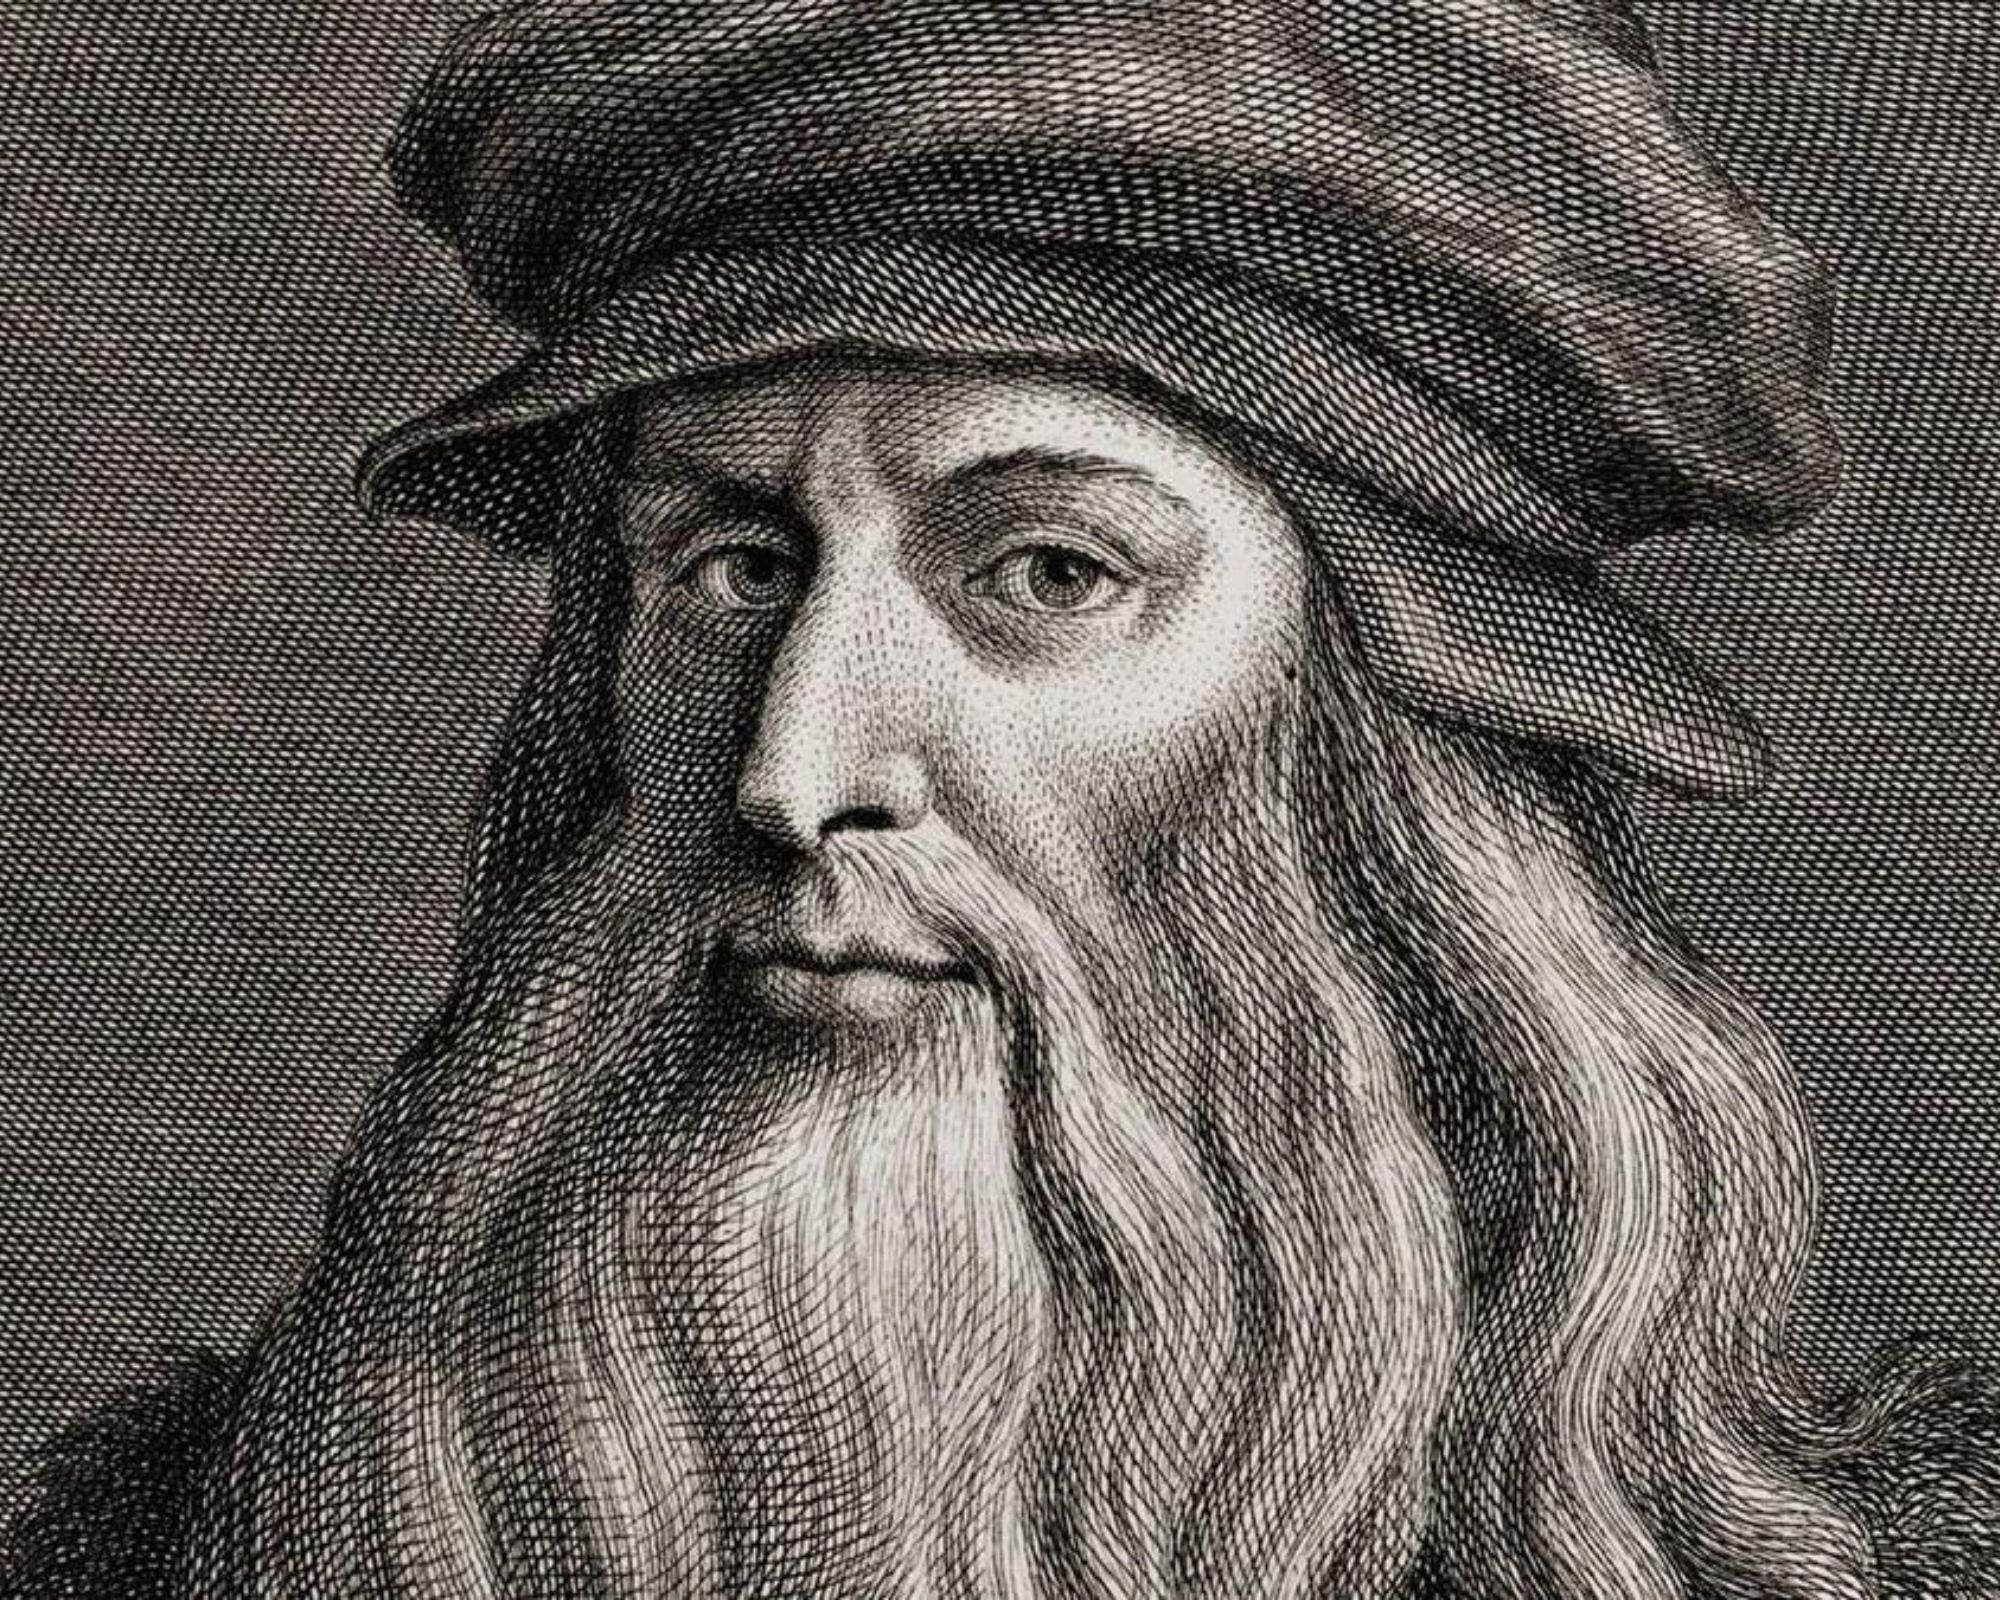 The National Gallery of Art in Washington, DC, has acquired a Leonardo da Vinci drawing